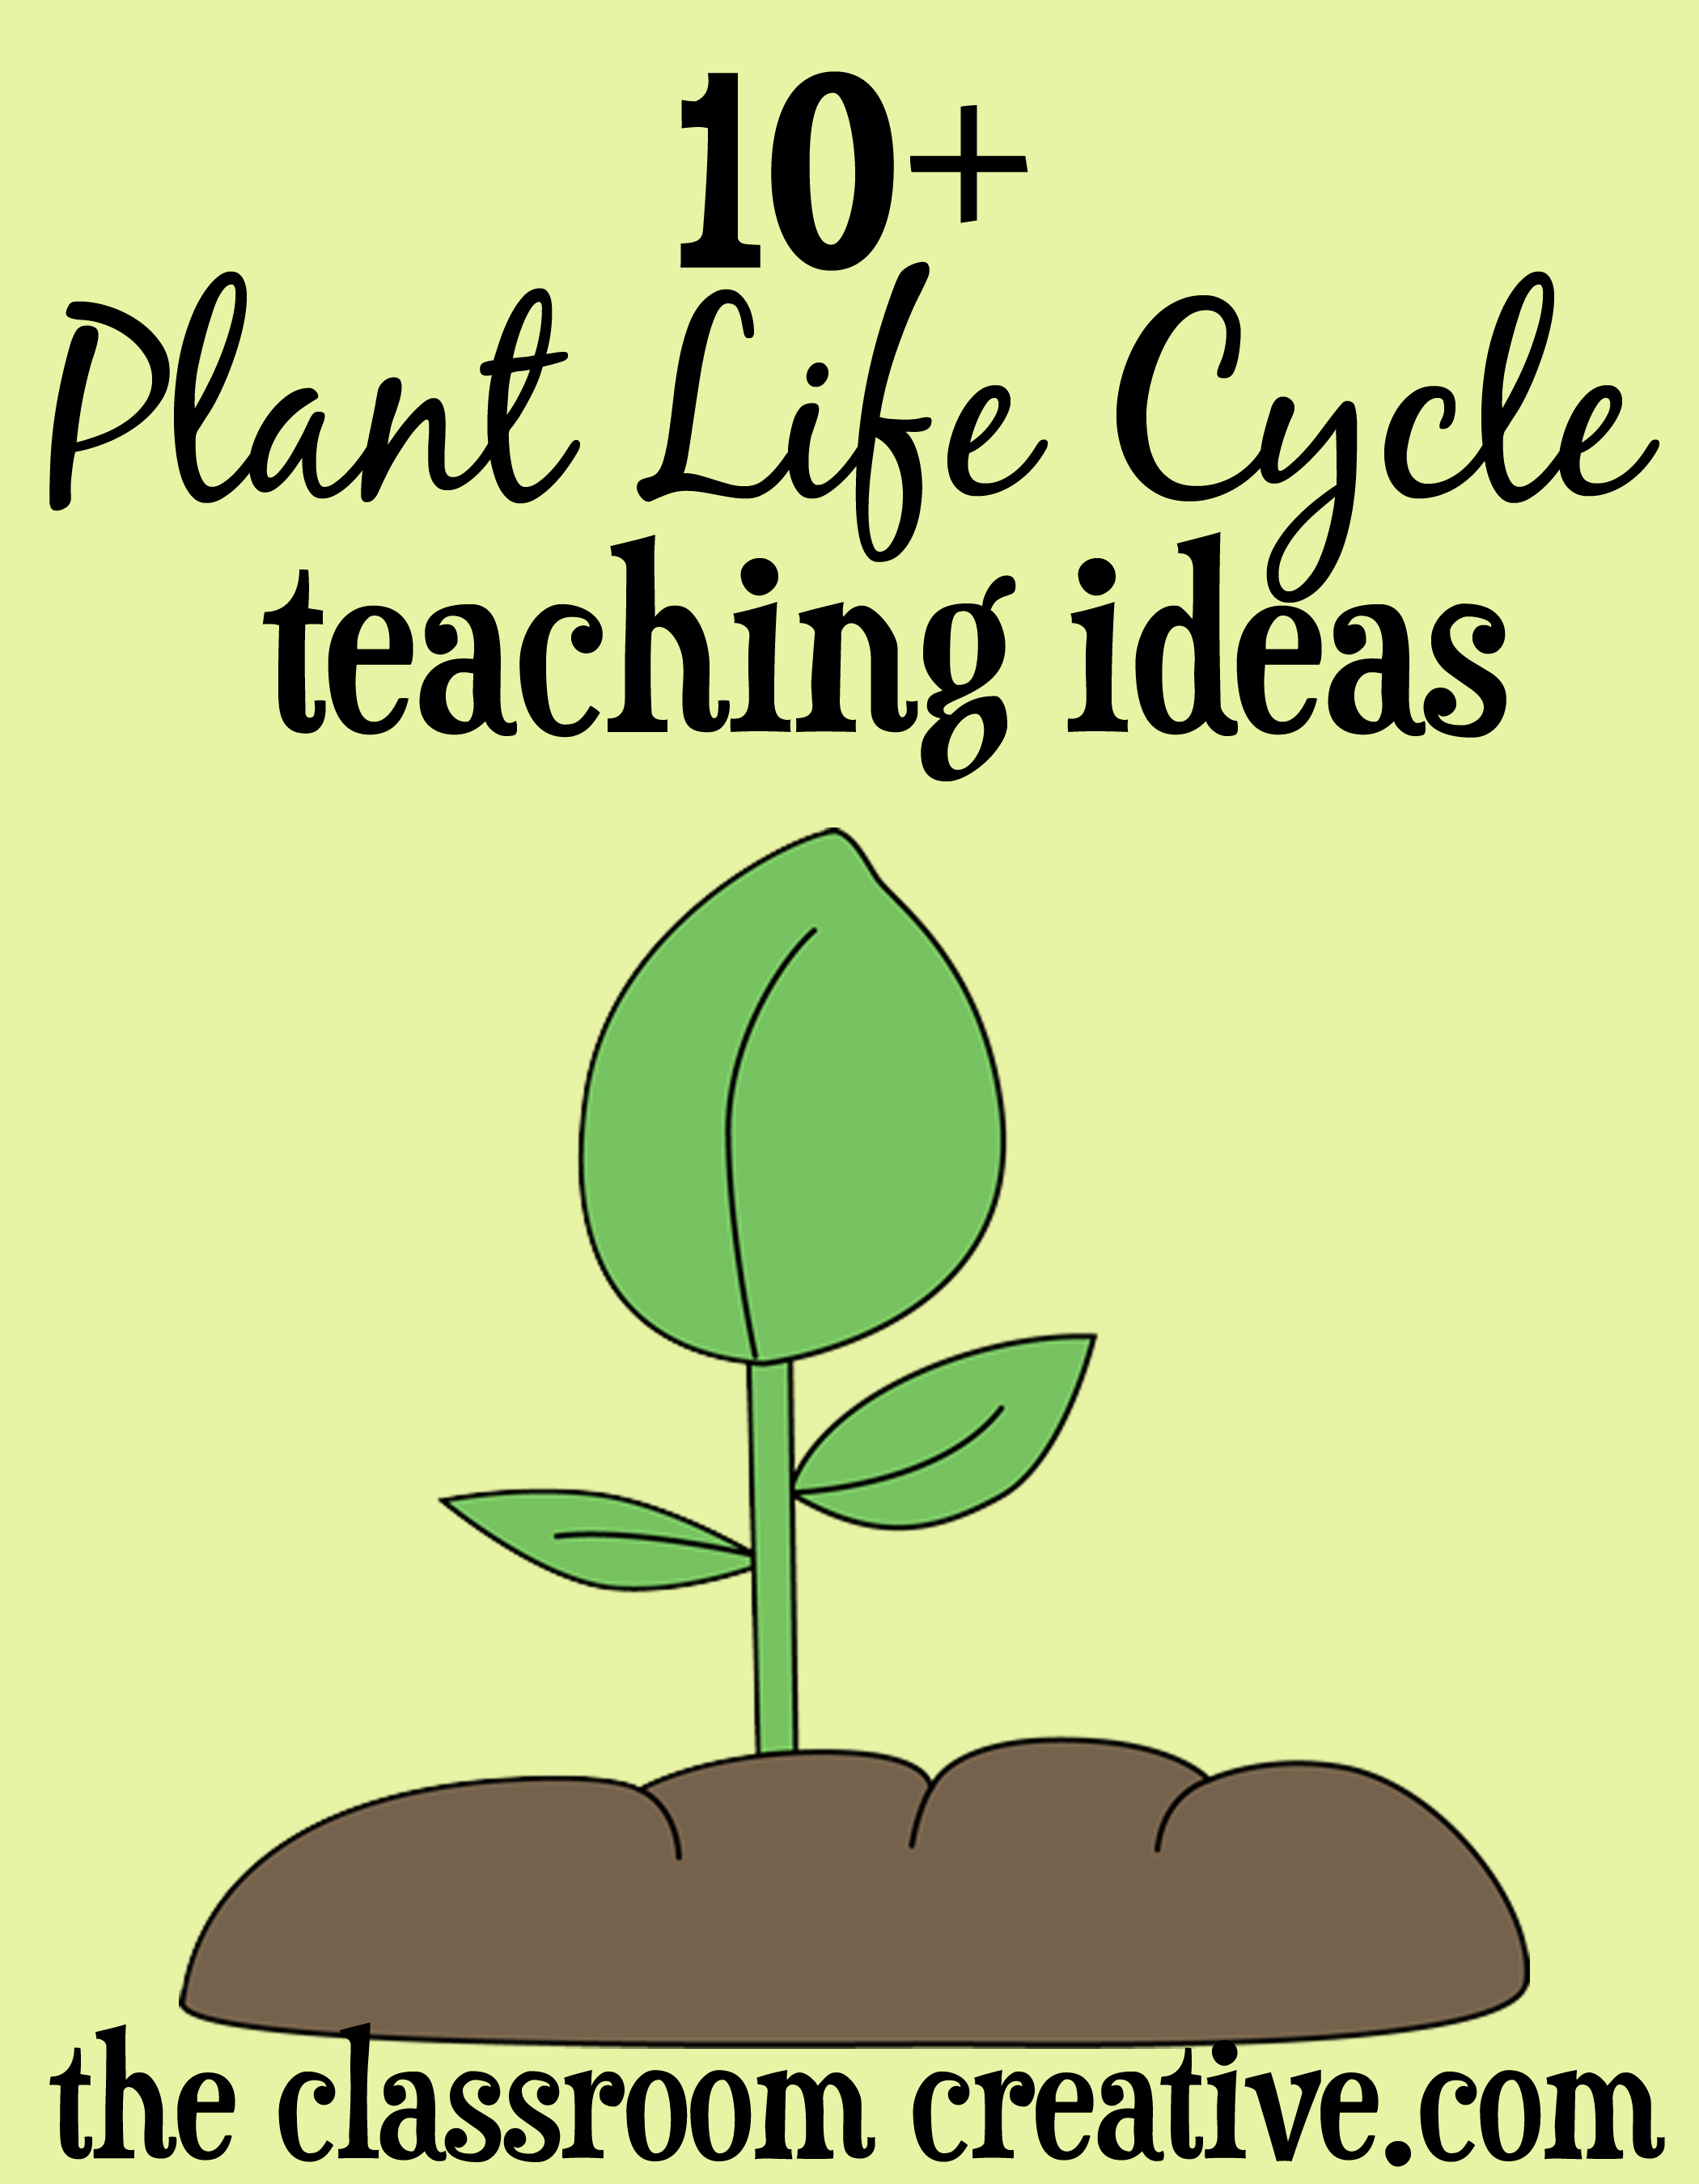 plant life cycle for preschool